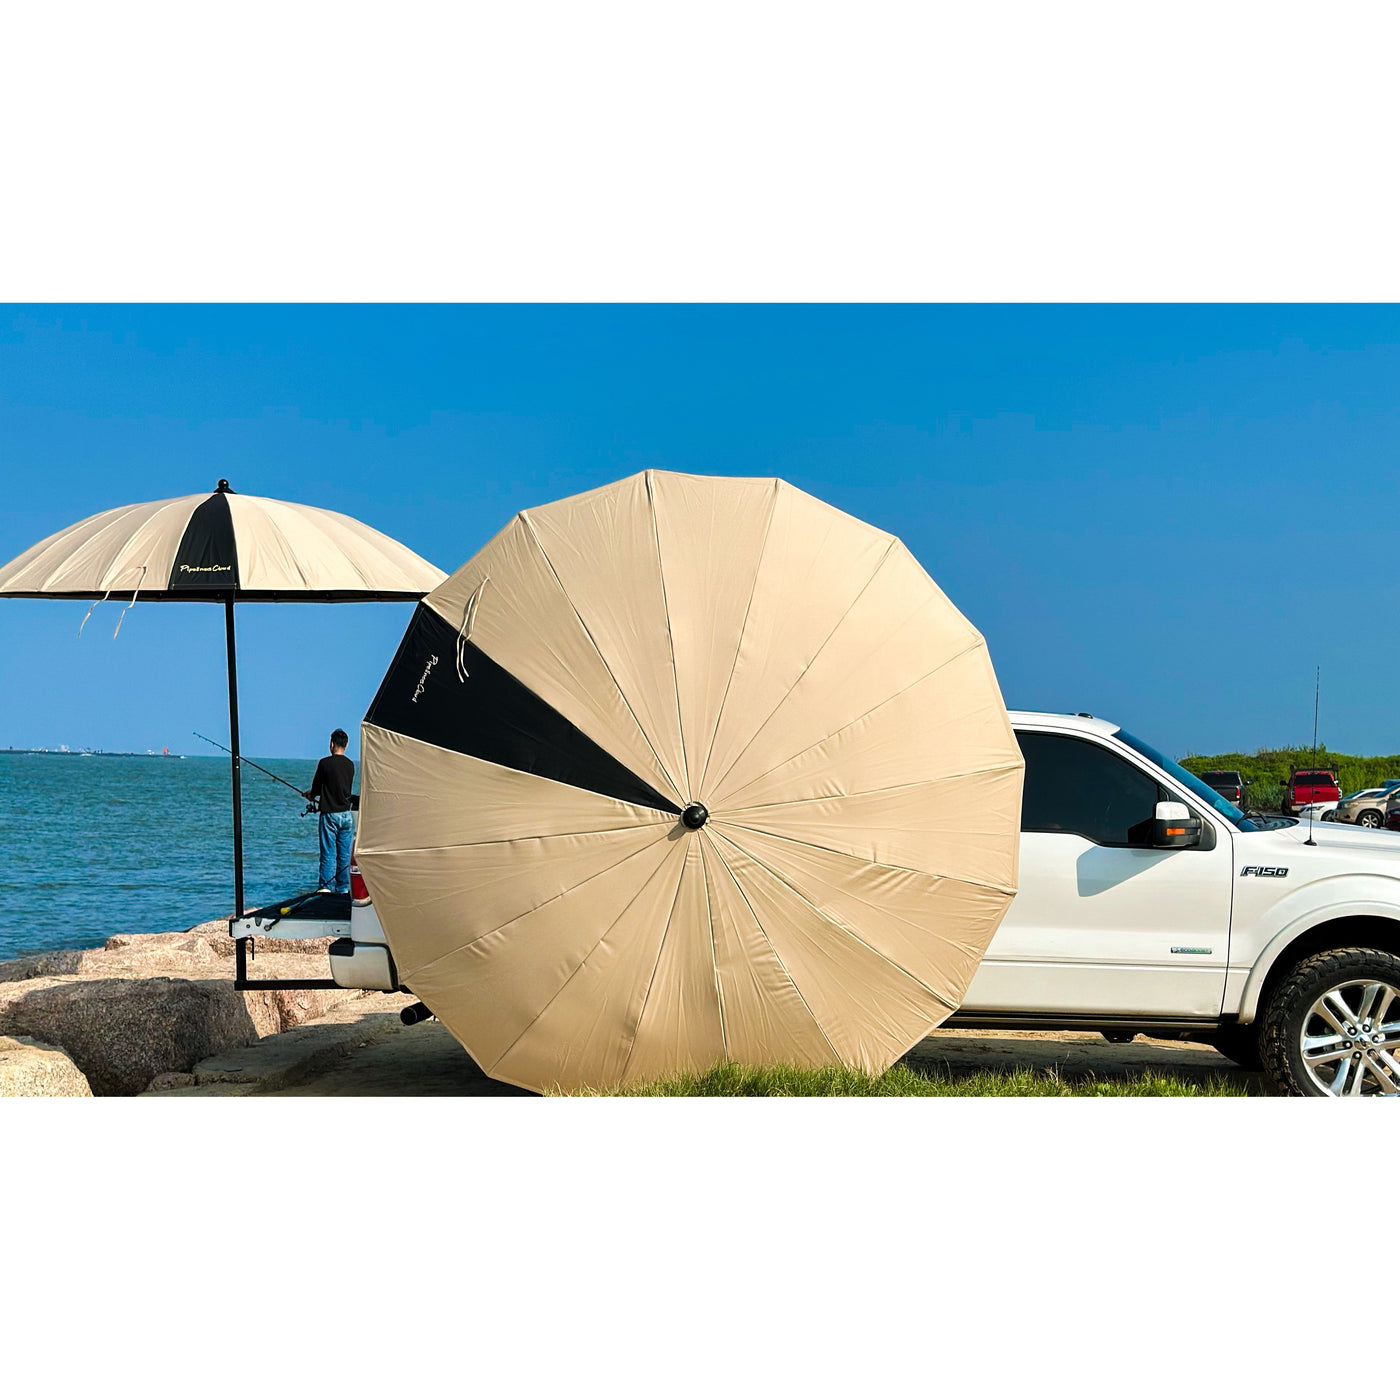 8' diameter Khaki Canopy 60Mph tested umbrella